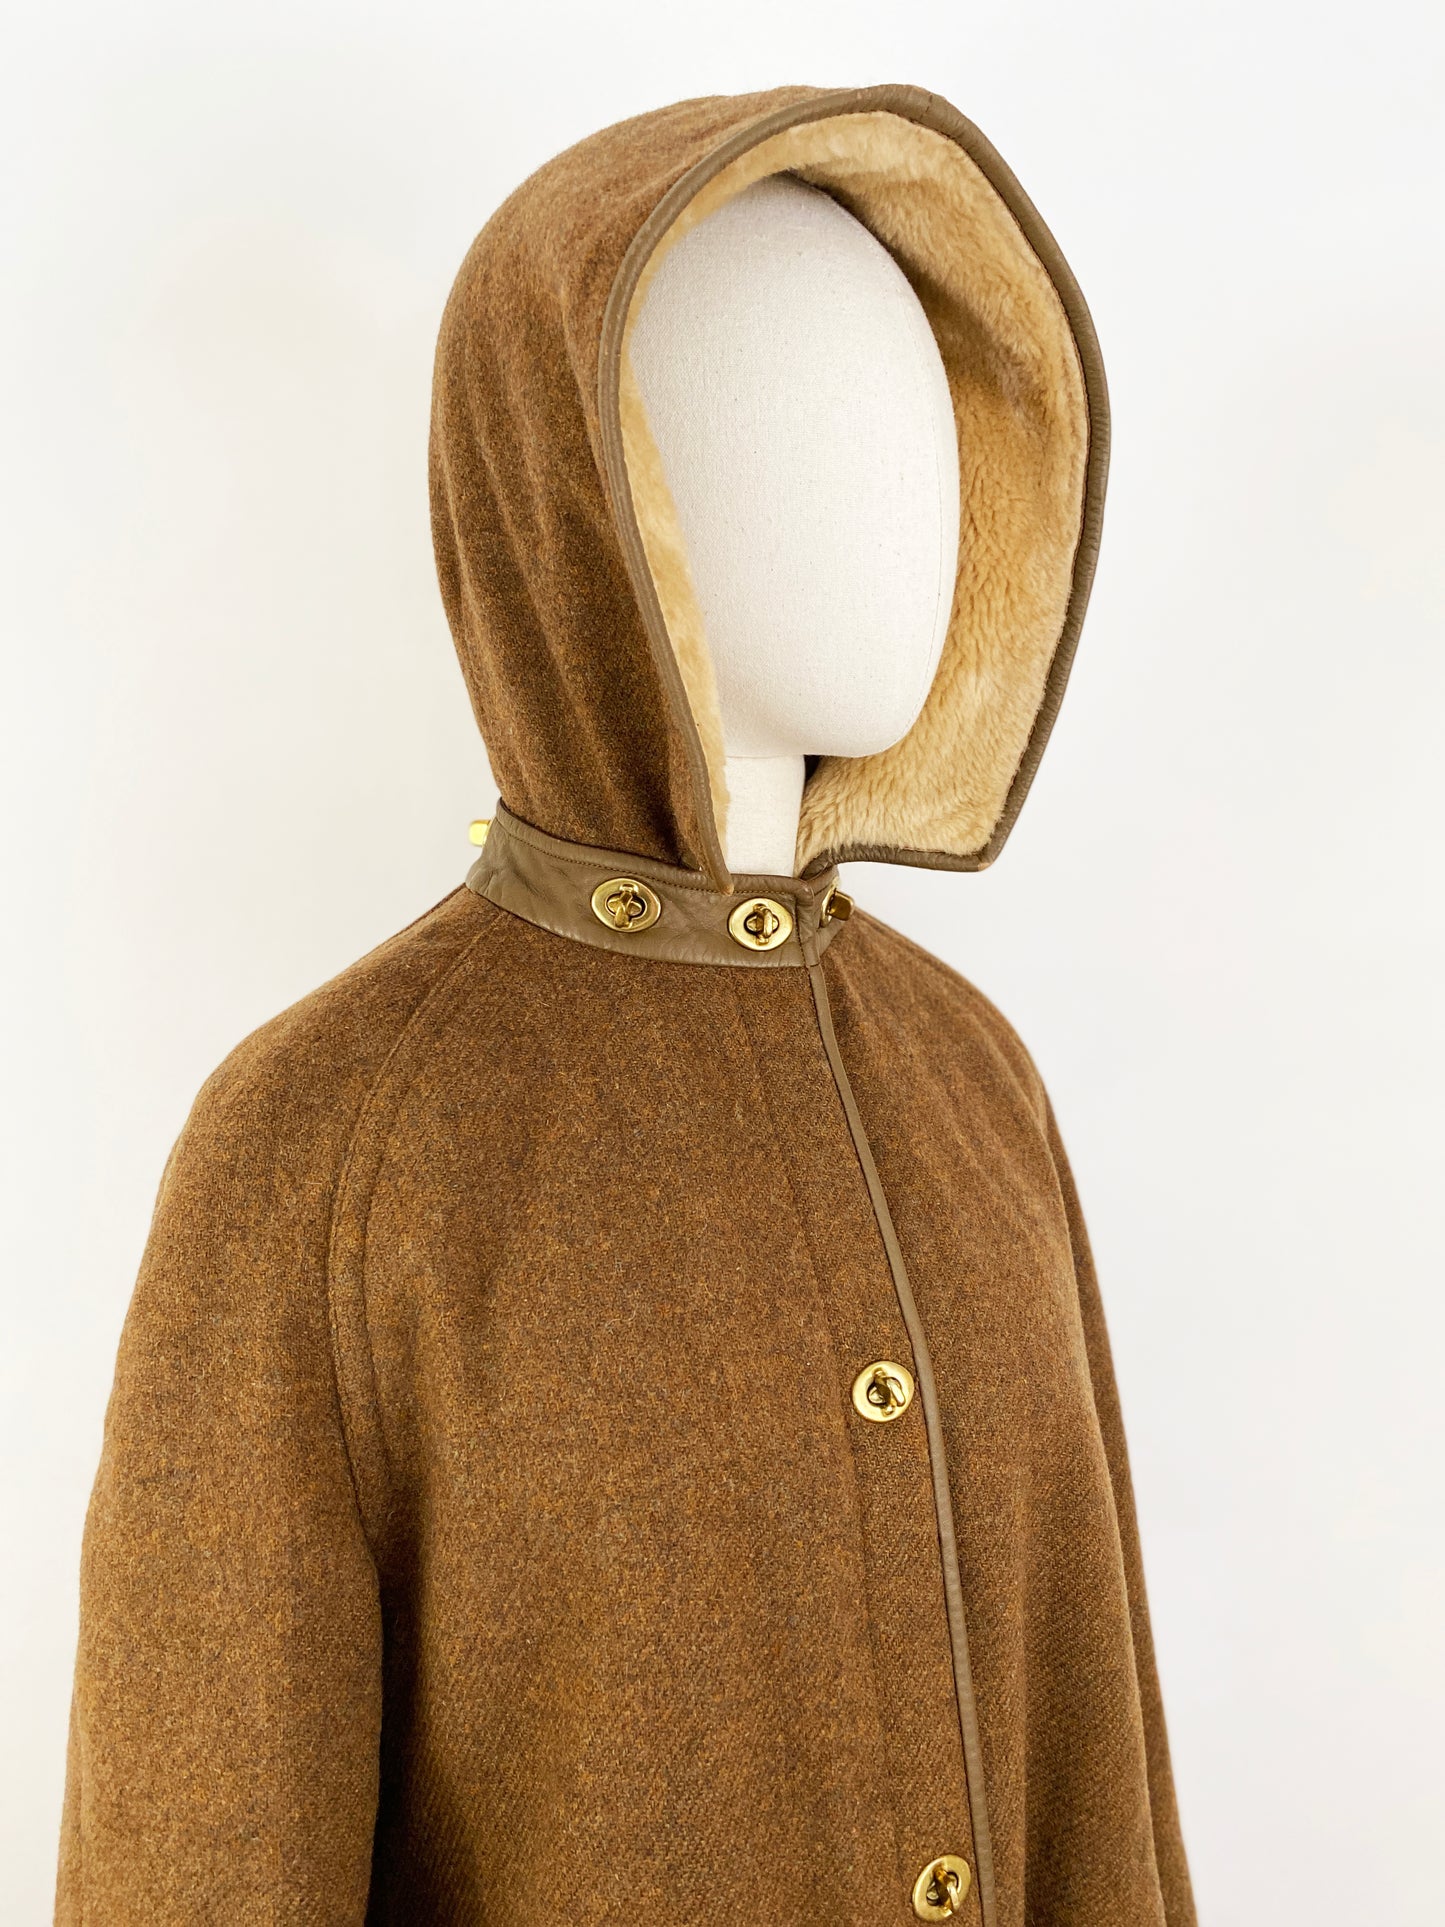 1960s Bonnie Cashin Brown Wool Removable Hood Turn Lock Closures Collar Swing Coat Fleece Lined Coach Vintage 60s / Sills / Medium-Large